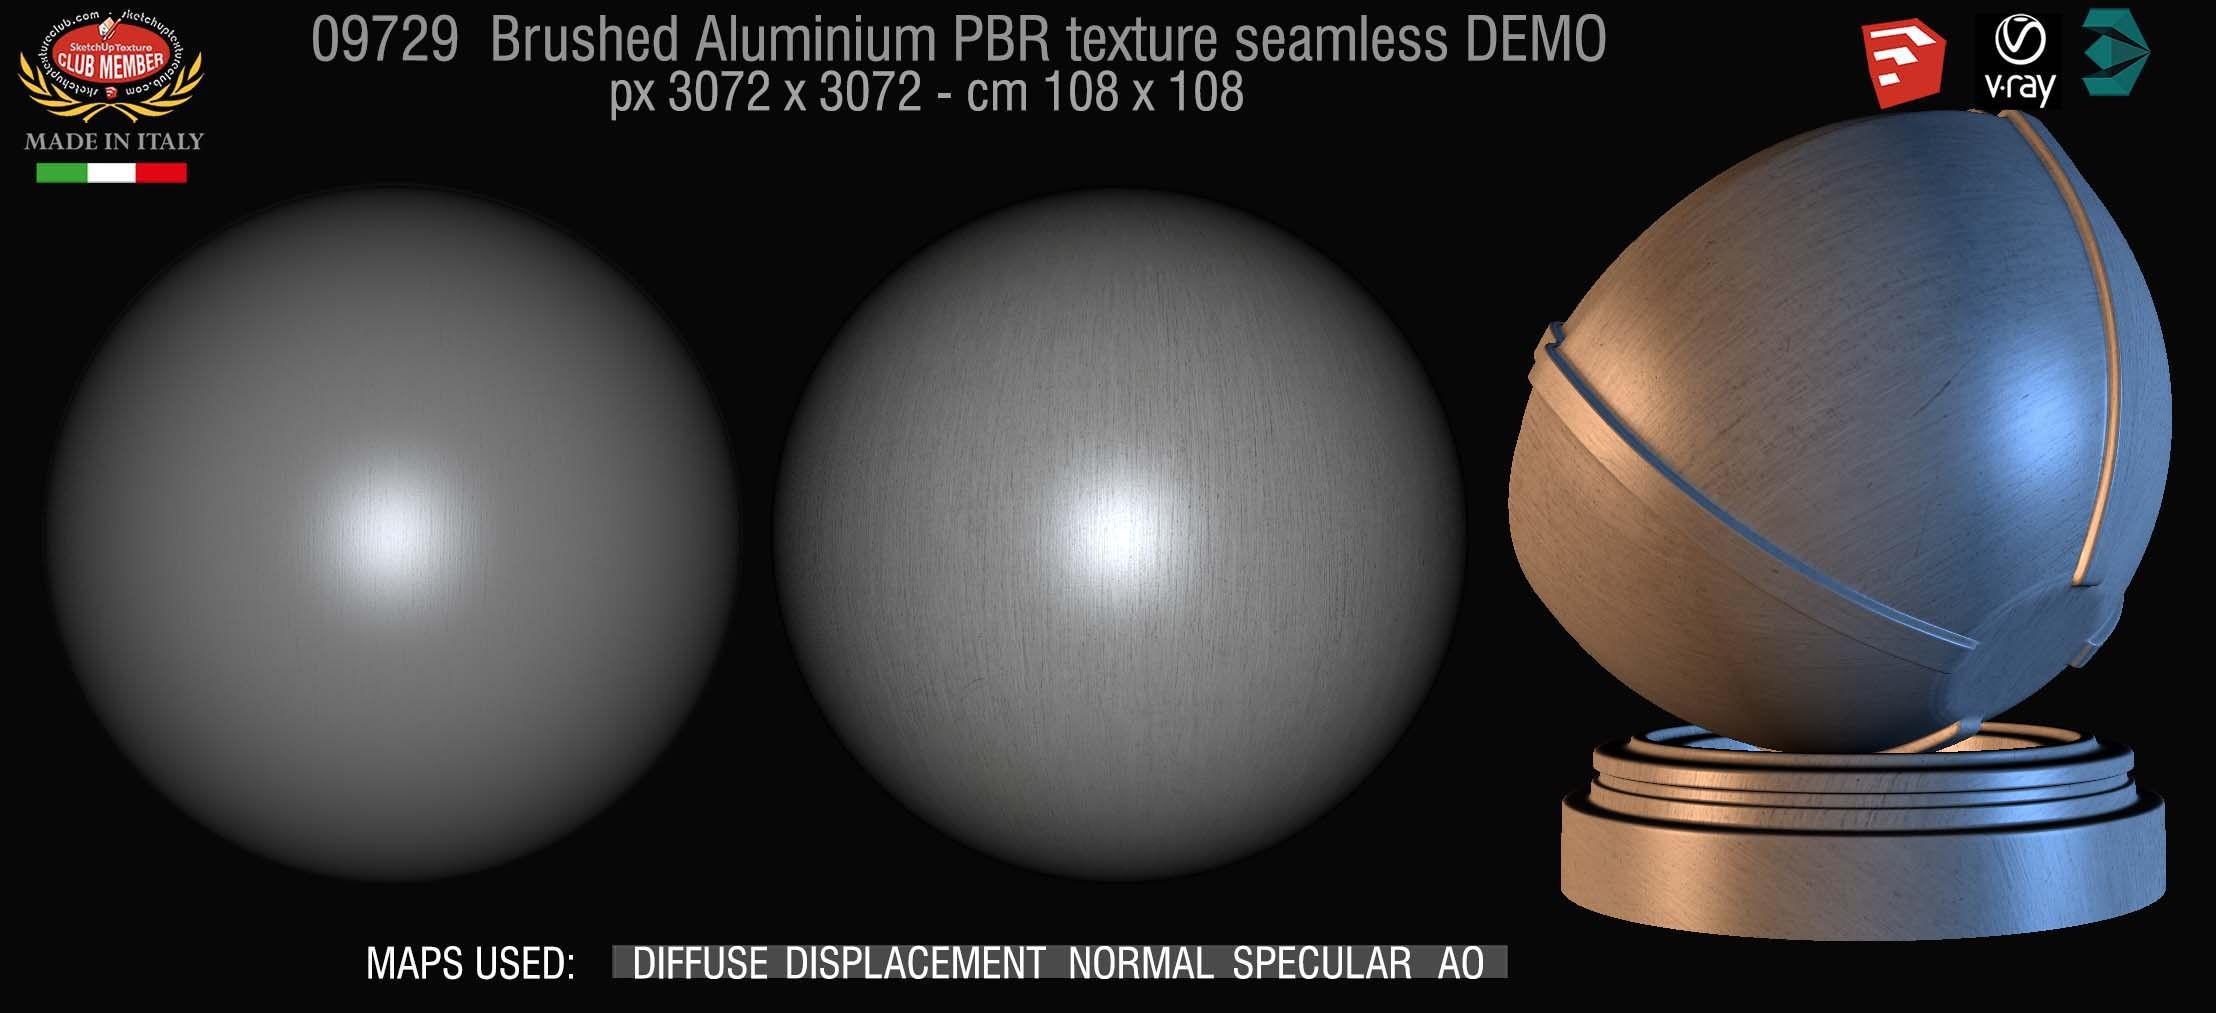 09729 Brushed aluminium PBR texture seamless DEMO